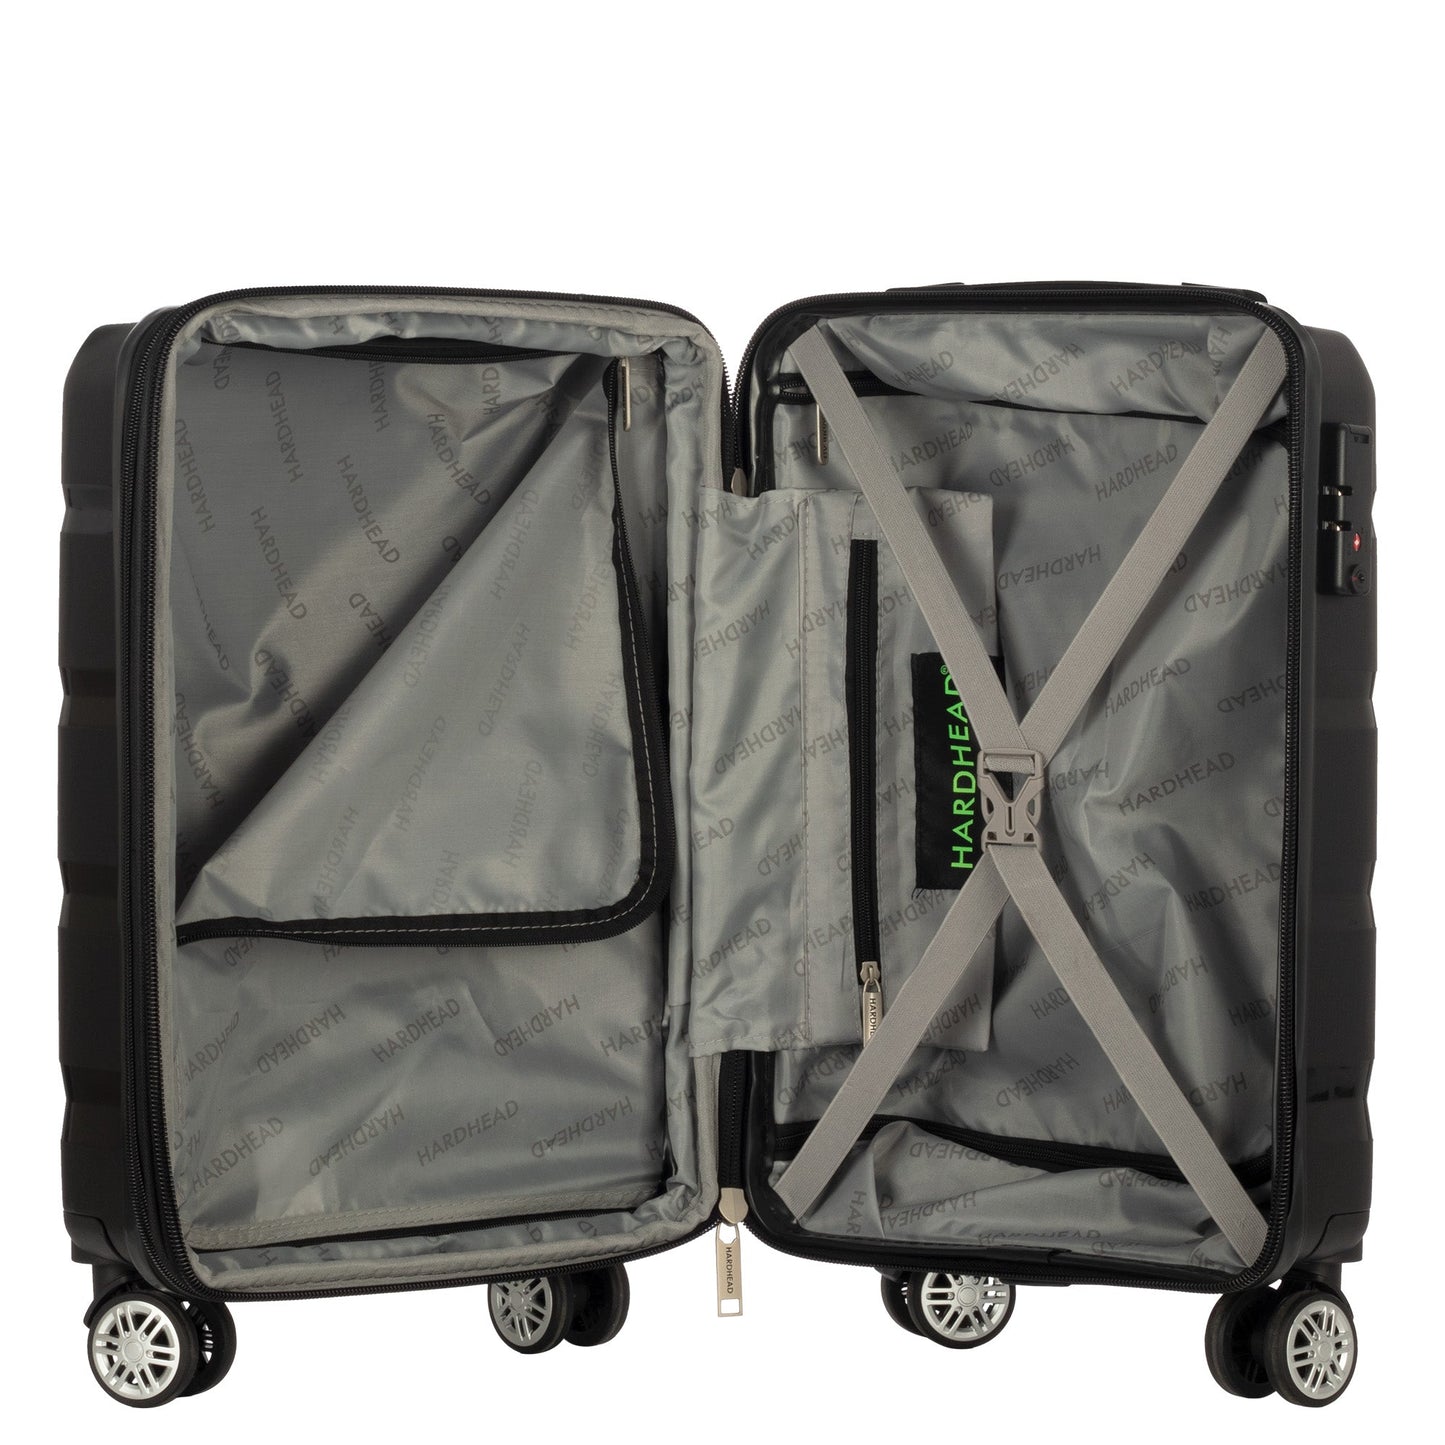 Ian Collection Black luggage (18") Suitcase Lock Spinner Hardshell